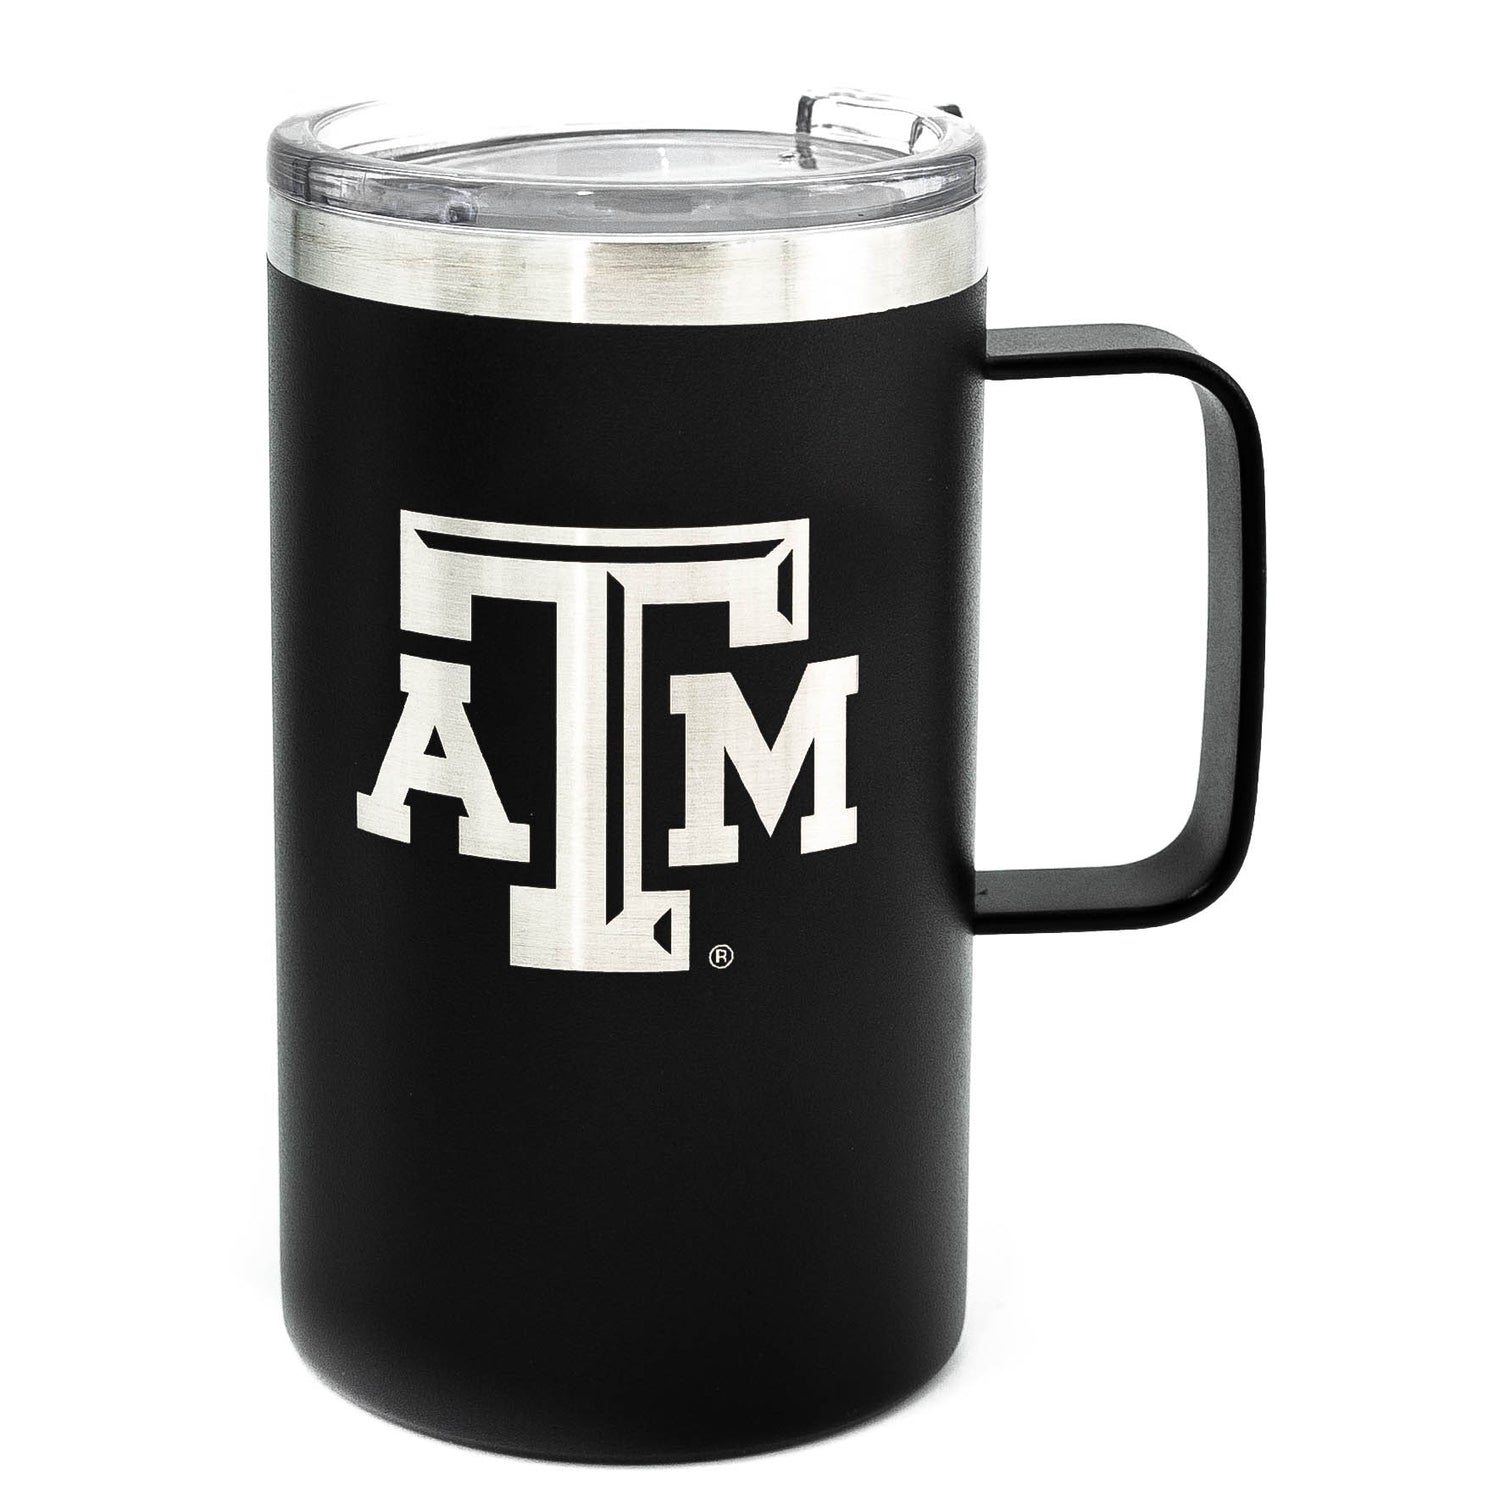 Texas A&M The Hustle Travel Mug